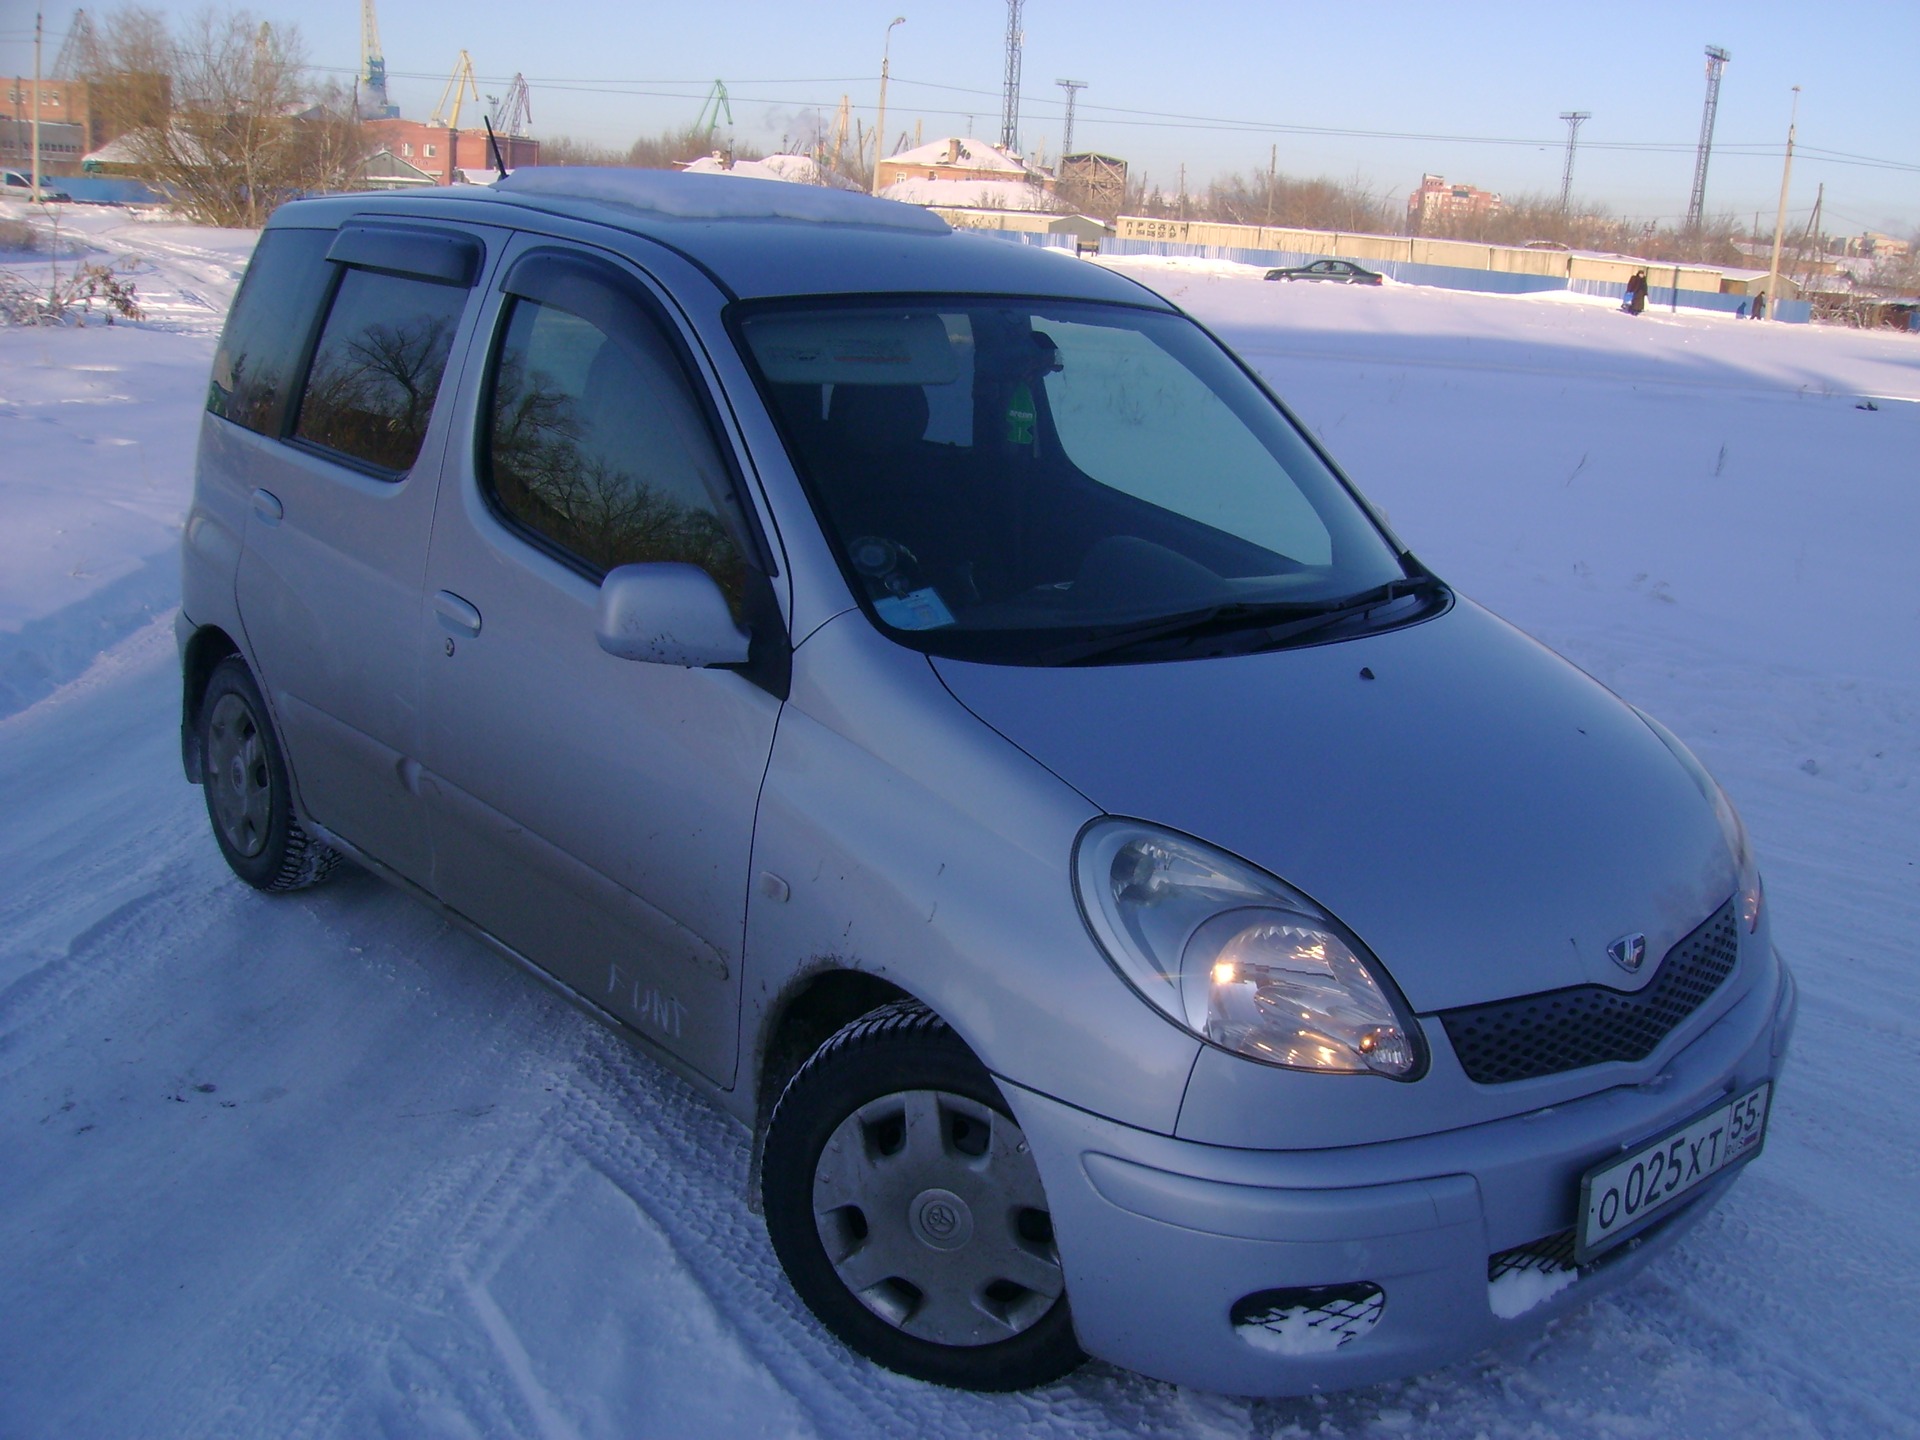   Toyota Funcargo 13 2003